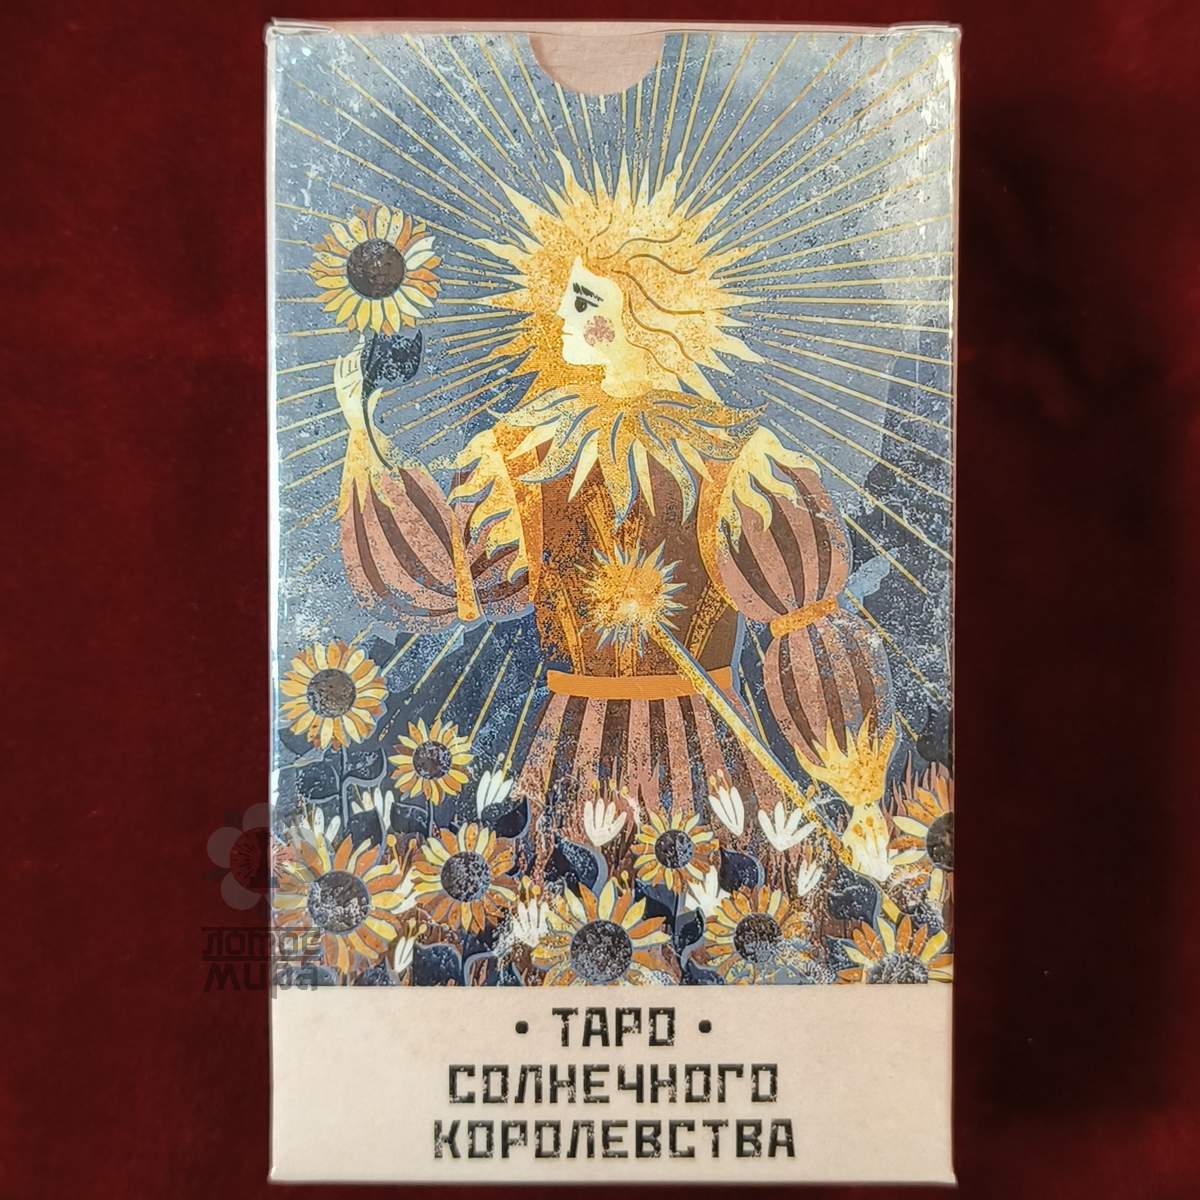 Tarot of the Solar Kingdom /Солнечного королевства/ Украина